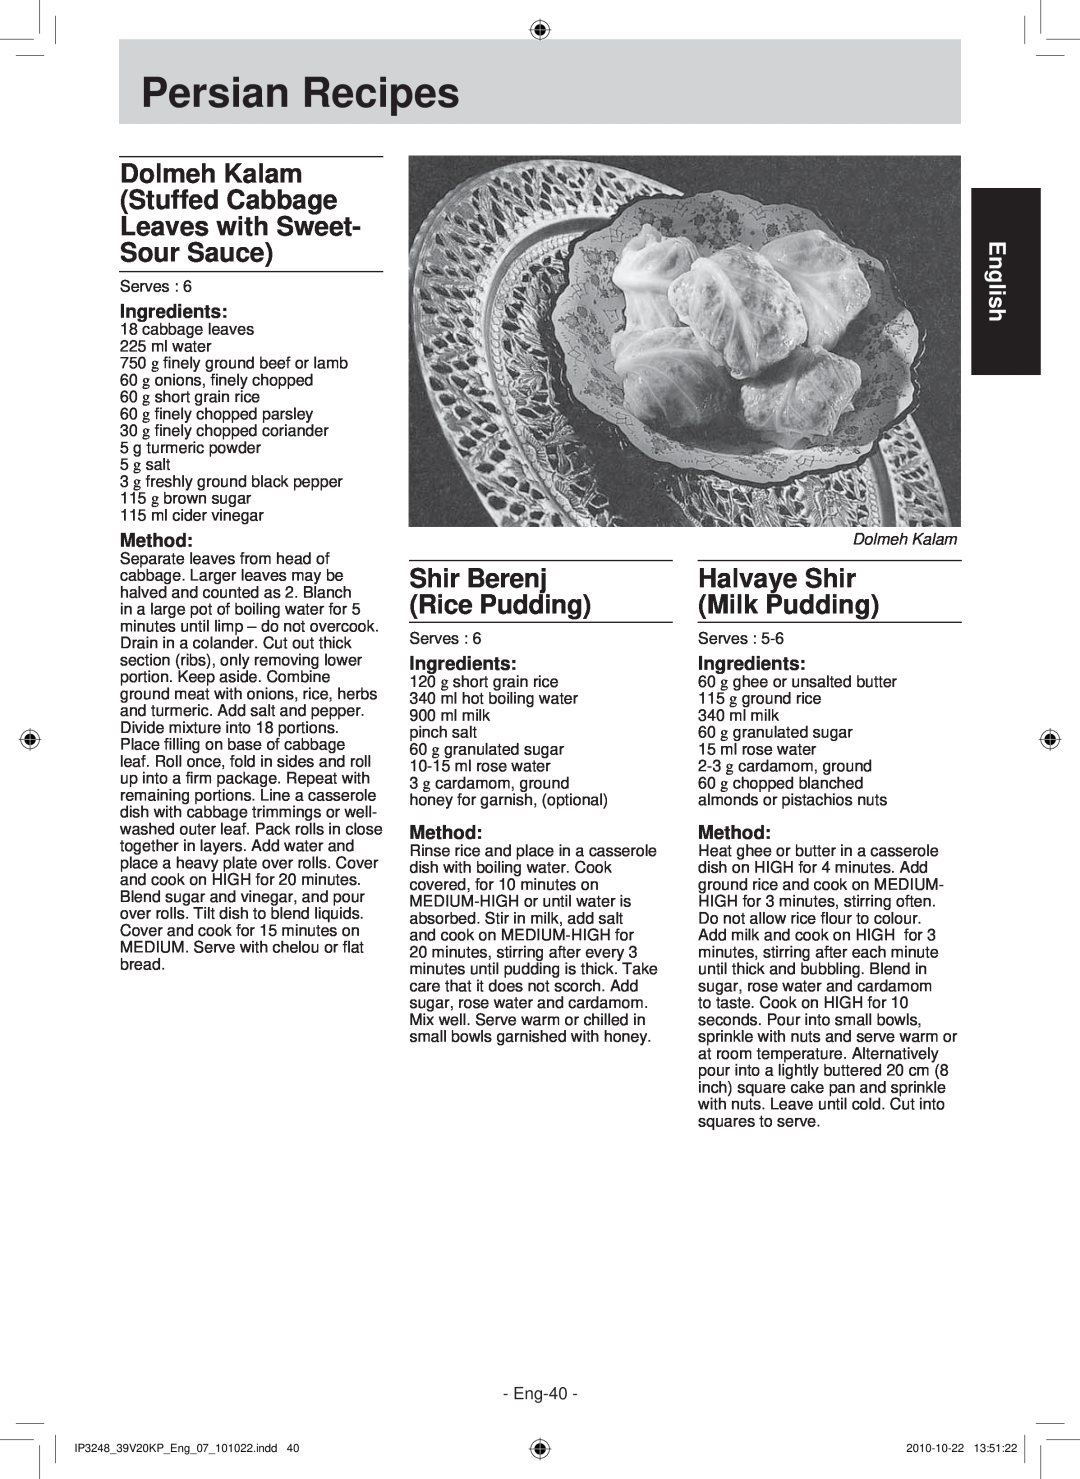 Panasonic NN-SM330W Halvaye Shir Milk Pudding, Dolmeh Kalam Stuffed Cabbage Leaves with Sweet- Sour Sauce, Persian Recipes 